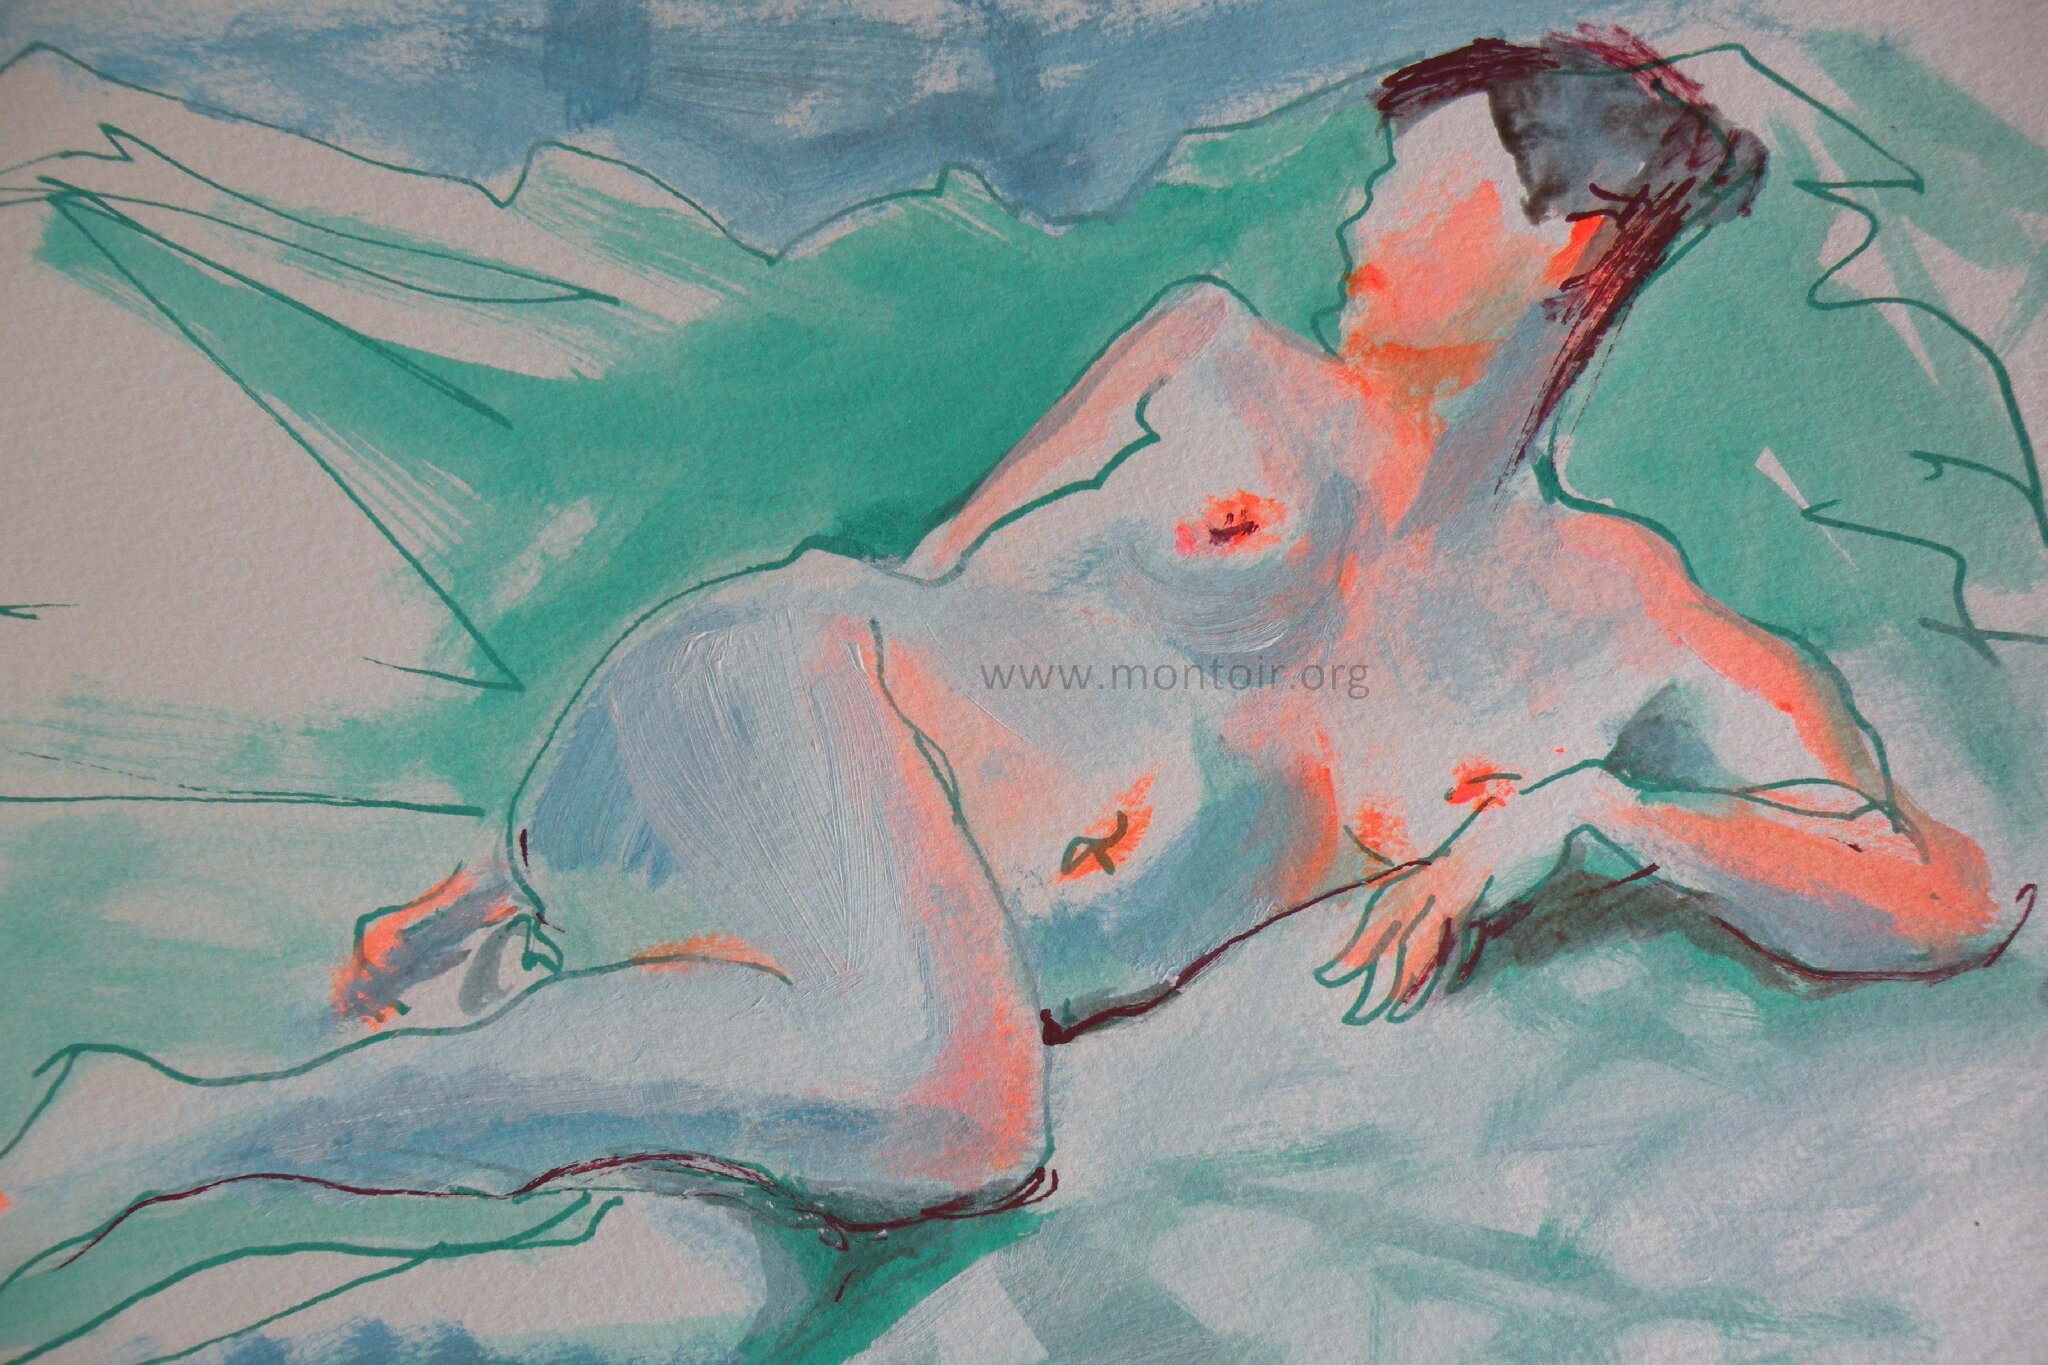 Alain Montoir Peintre de nus (3)